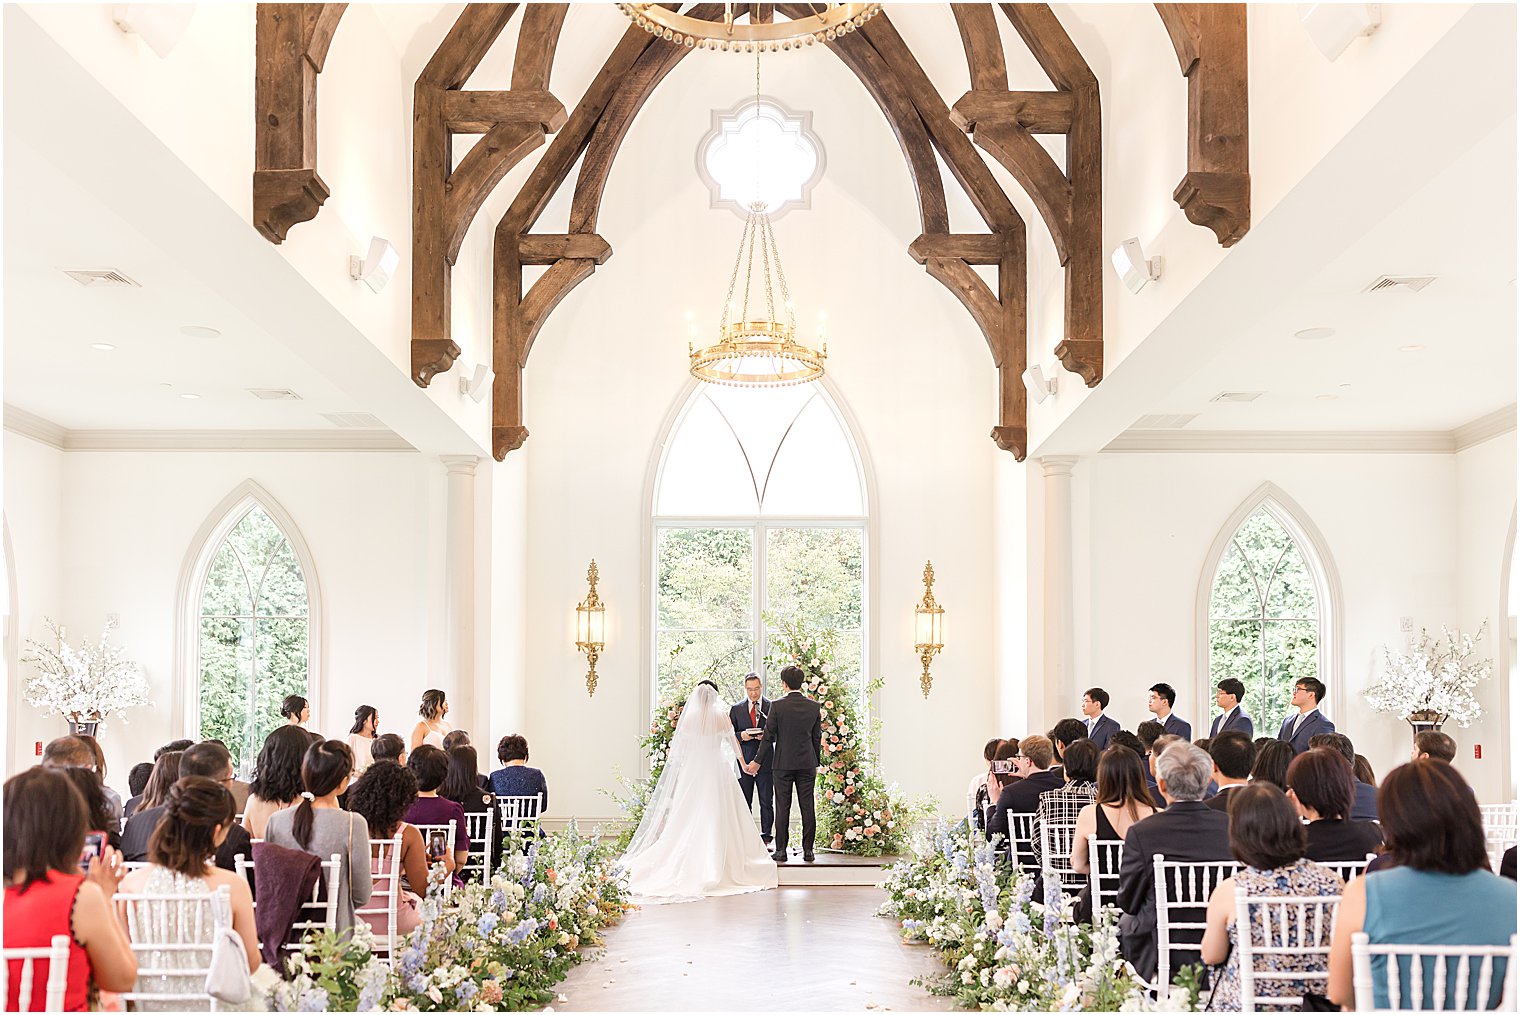 Park Chateau chapel wedding ceremony with florals along aisle 